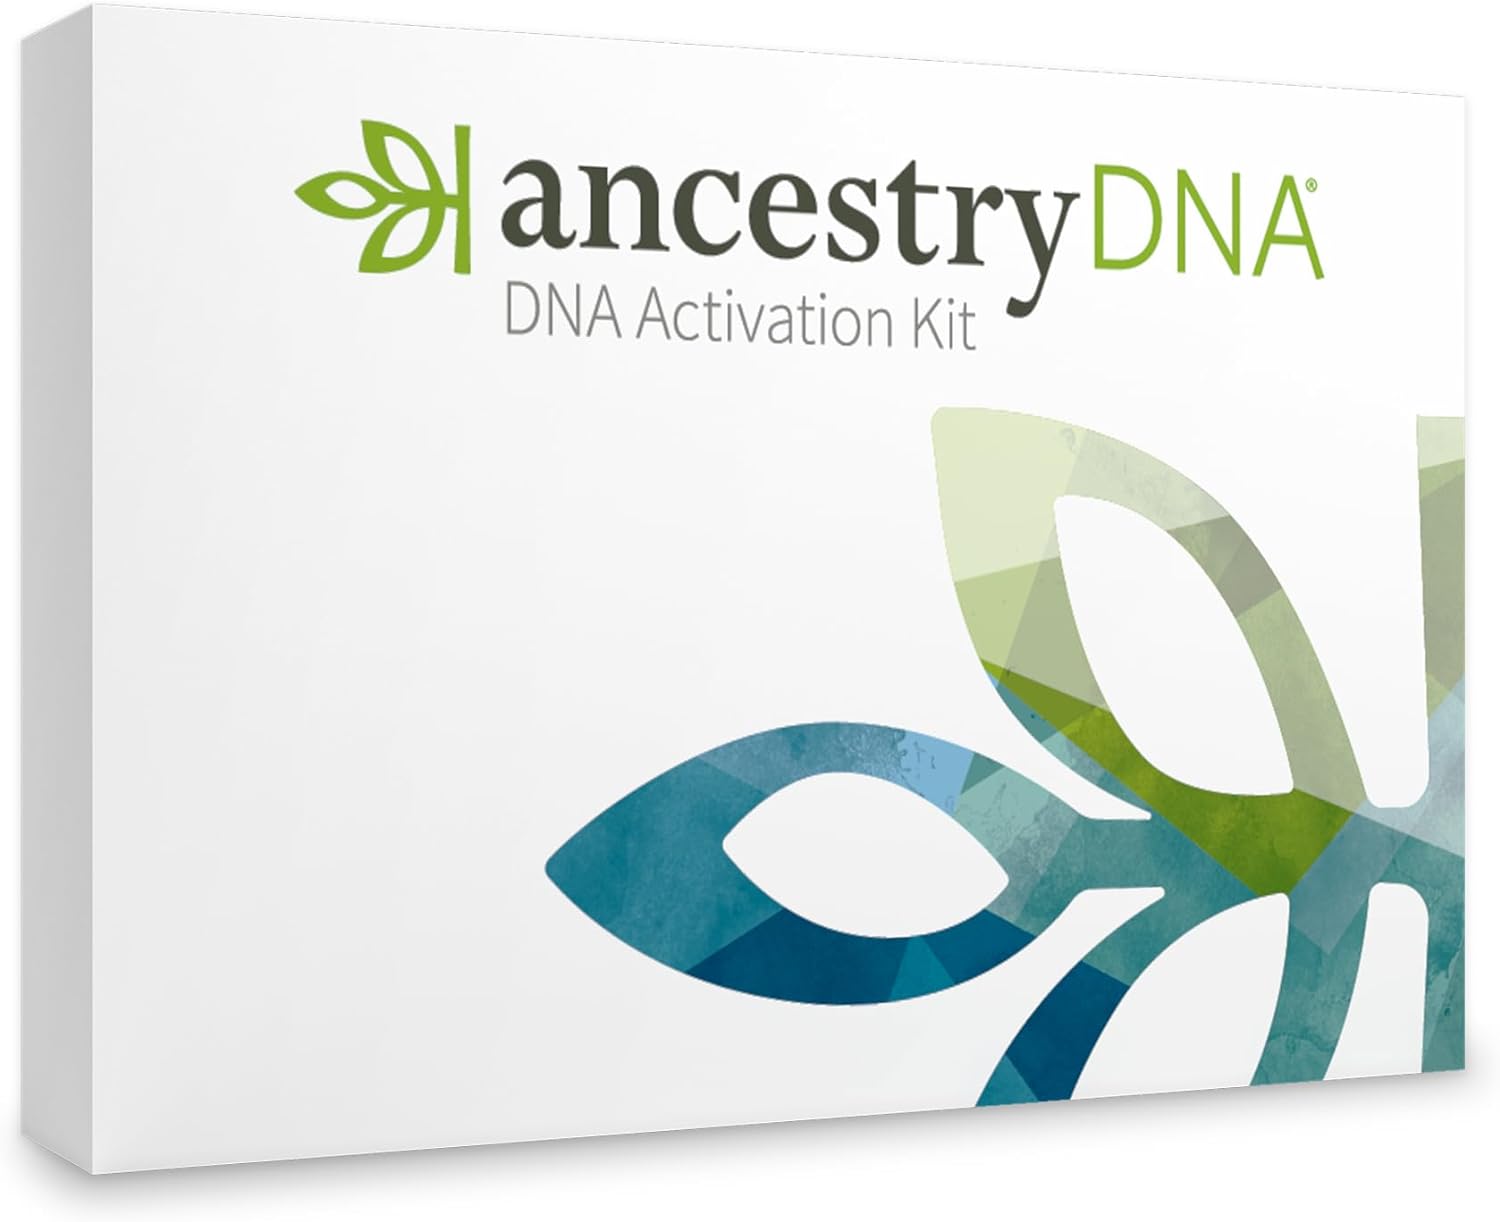 Ancestry DNA test kit 60% off @ Amazon - $39